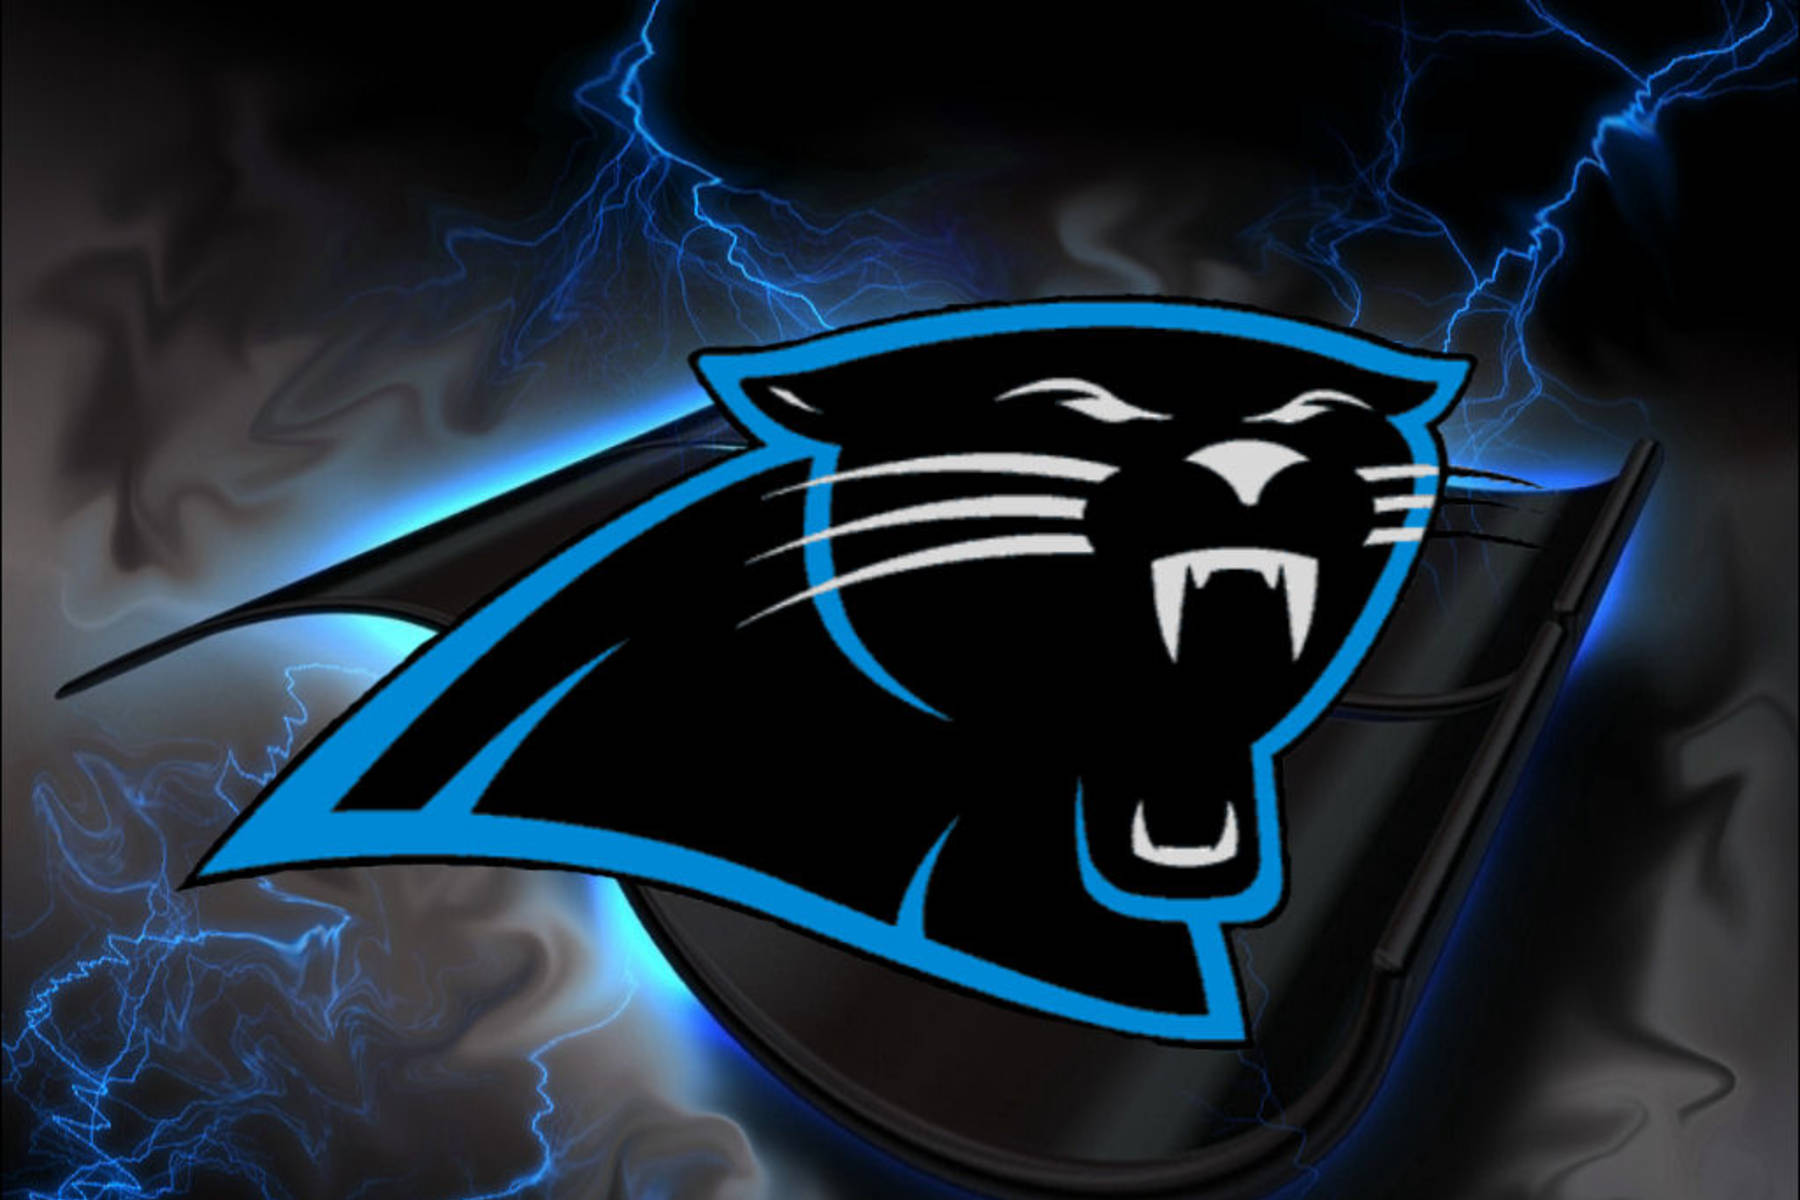 Carolina Panthers Logo Backgrounds Free Download - PixelsTalk.Net